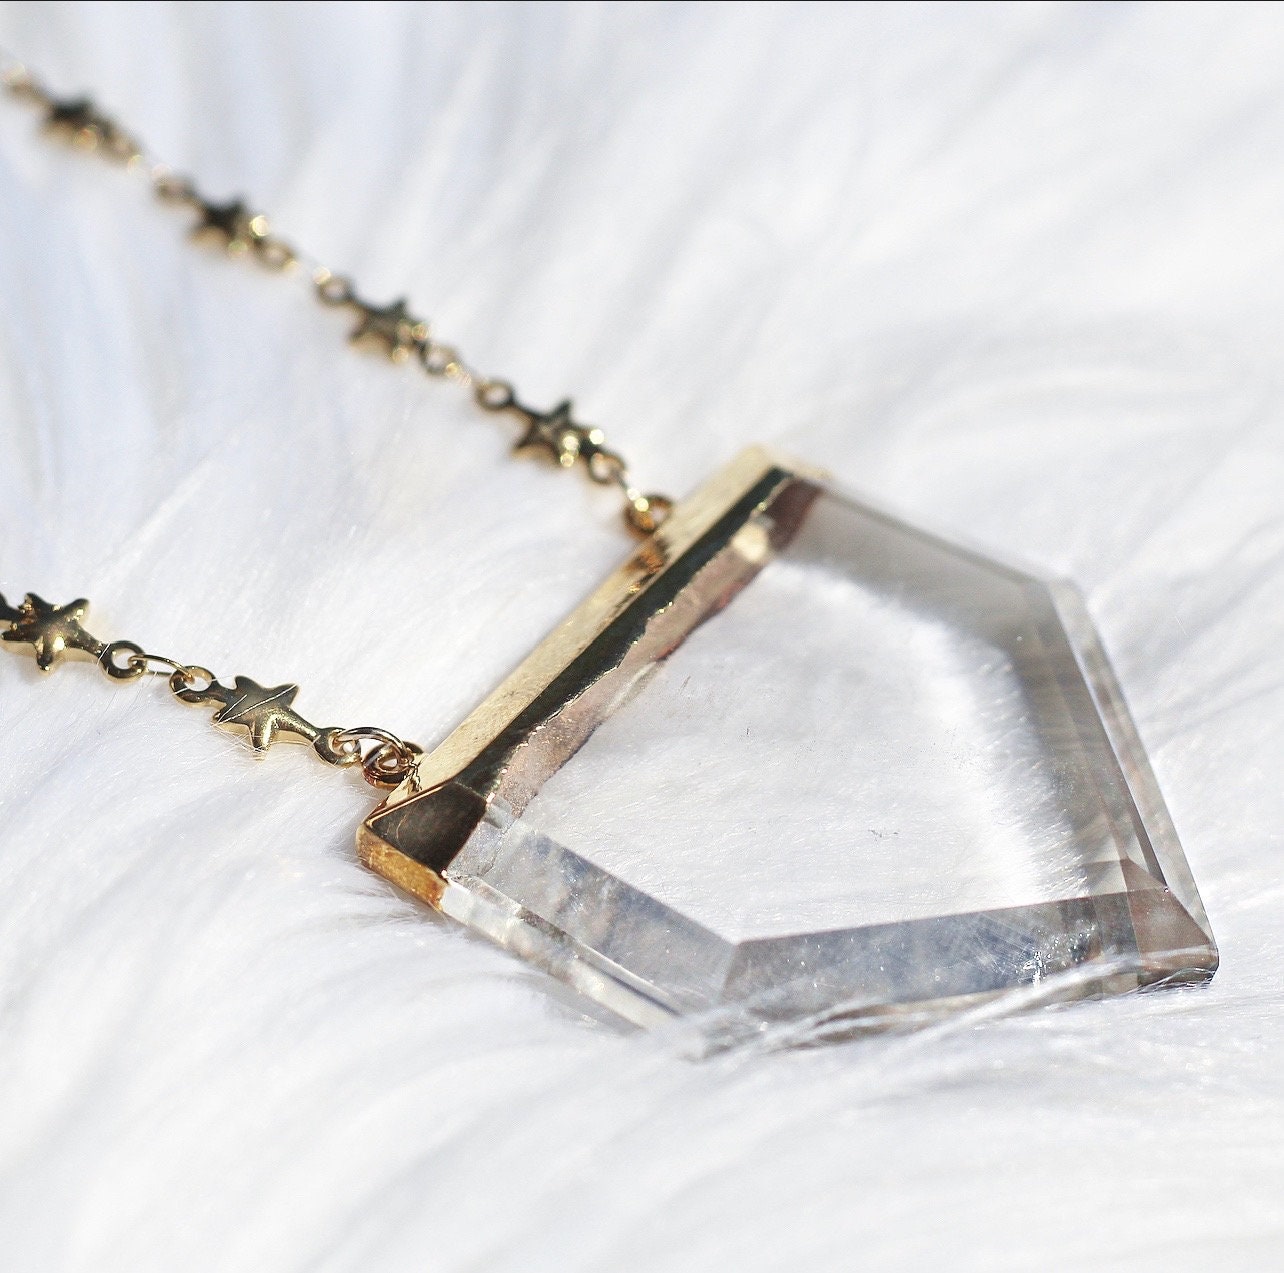 My largest crystal pendant yet! Rutile quartz necklace : r/handmade